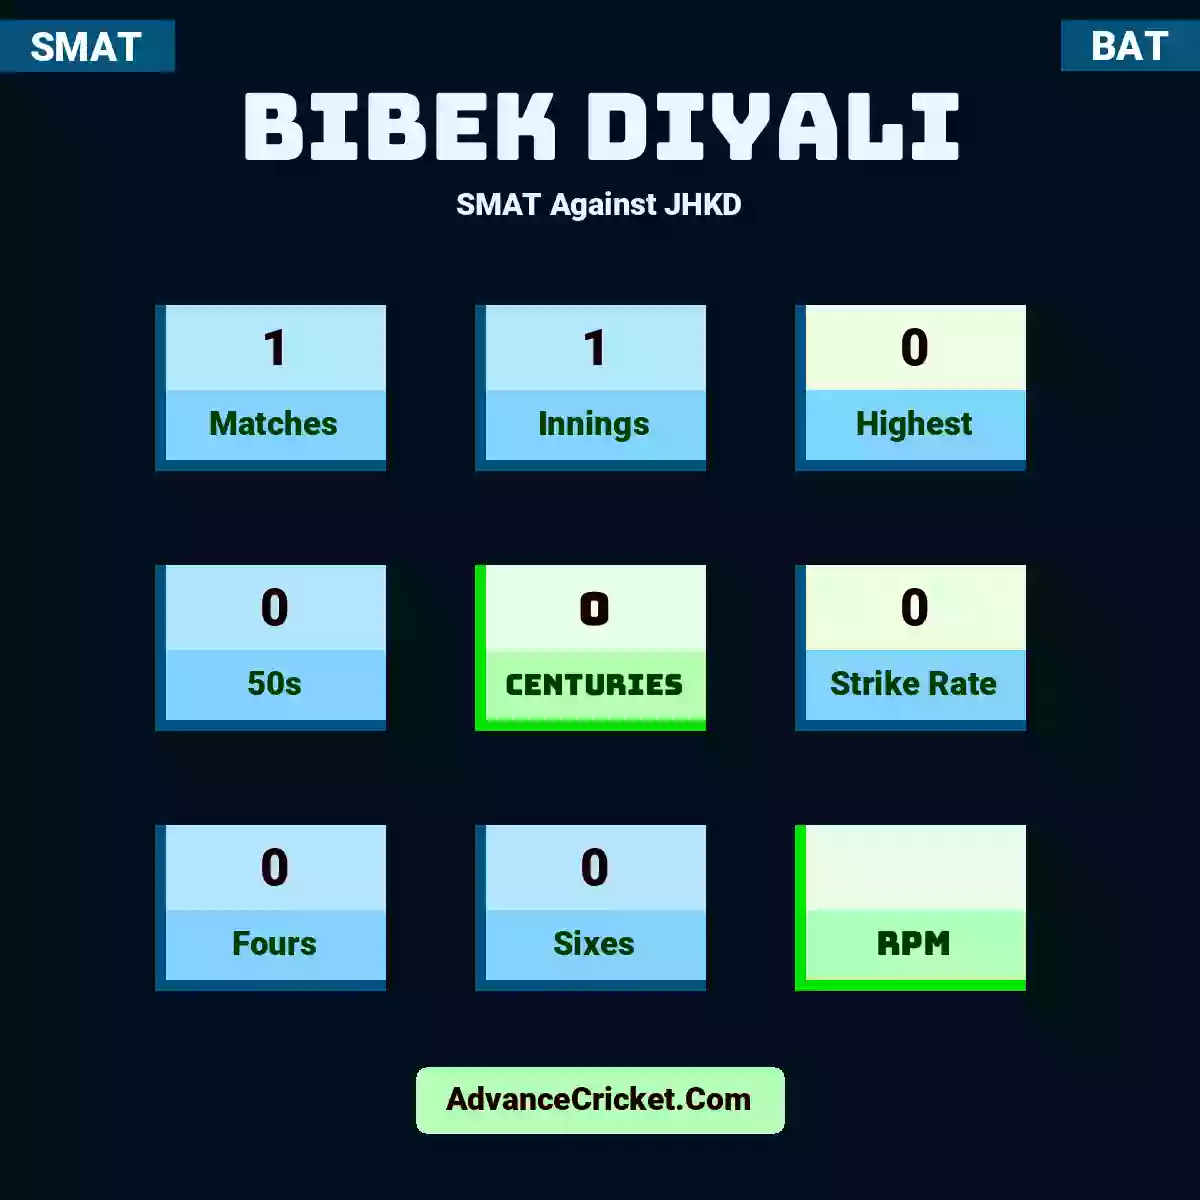 Bibek Diyali SMAT  Against JHKD, Bibek Diyali played 1 matches, scored 0 runs as highest, 0 half-centuries, and 0 centuries, with a strike rate of 0. B.Diyali hit 0 fours and 0 sixes.